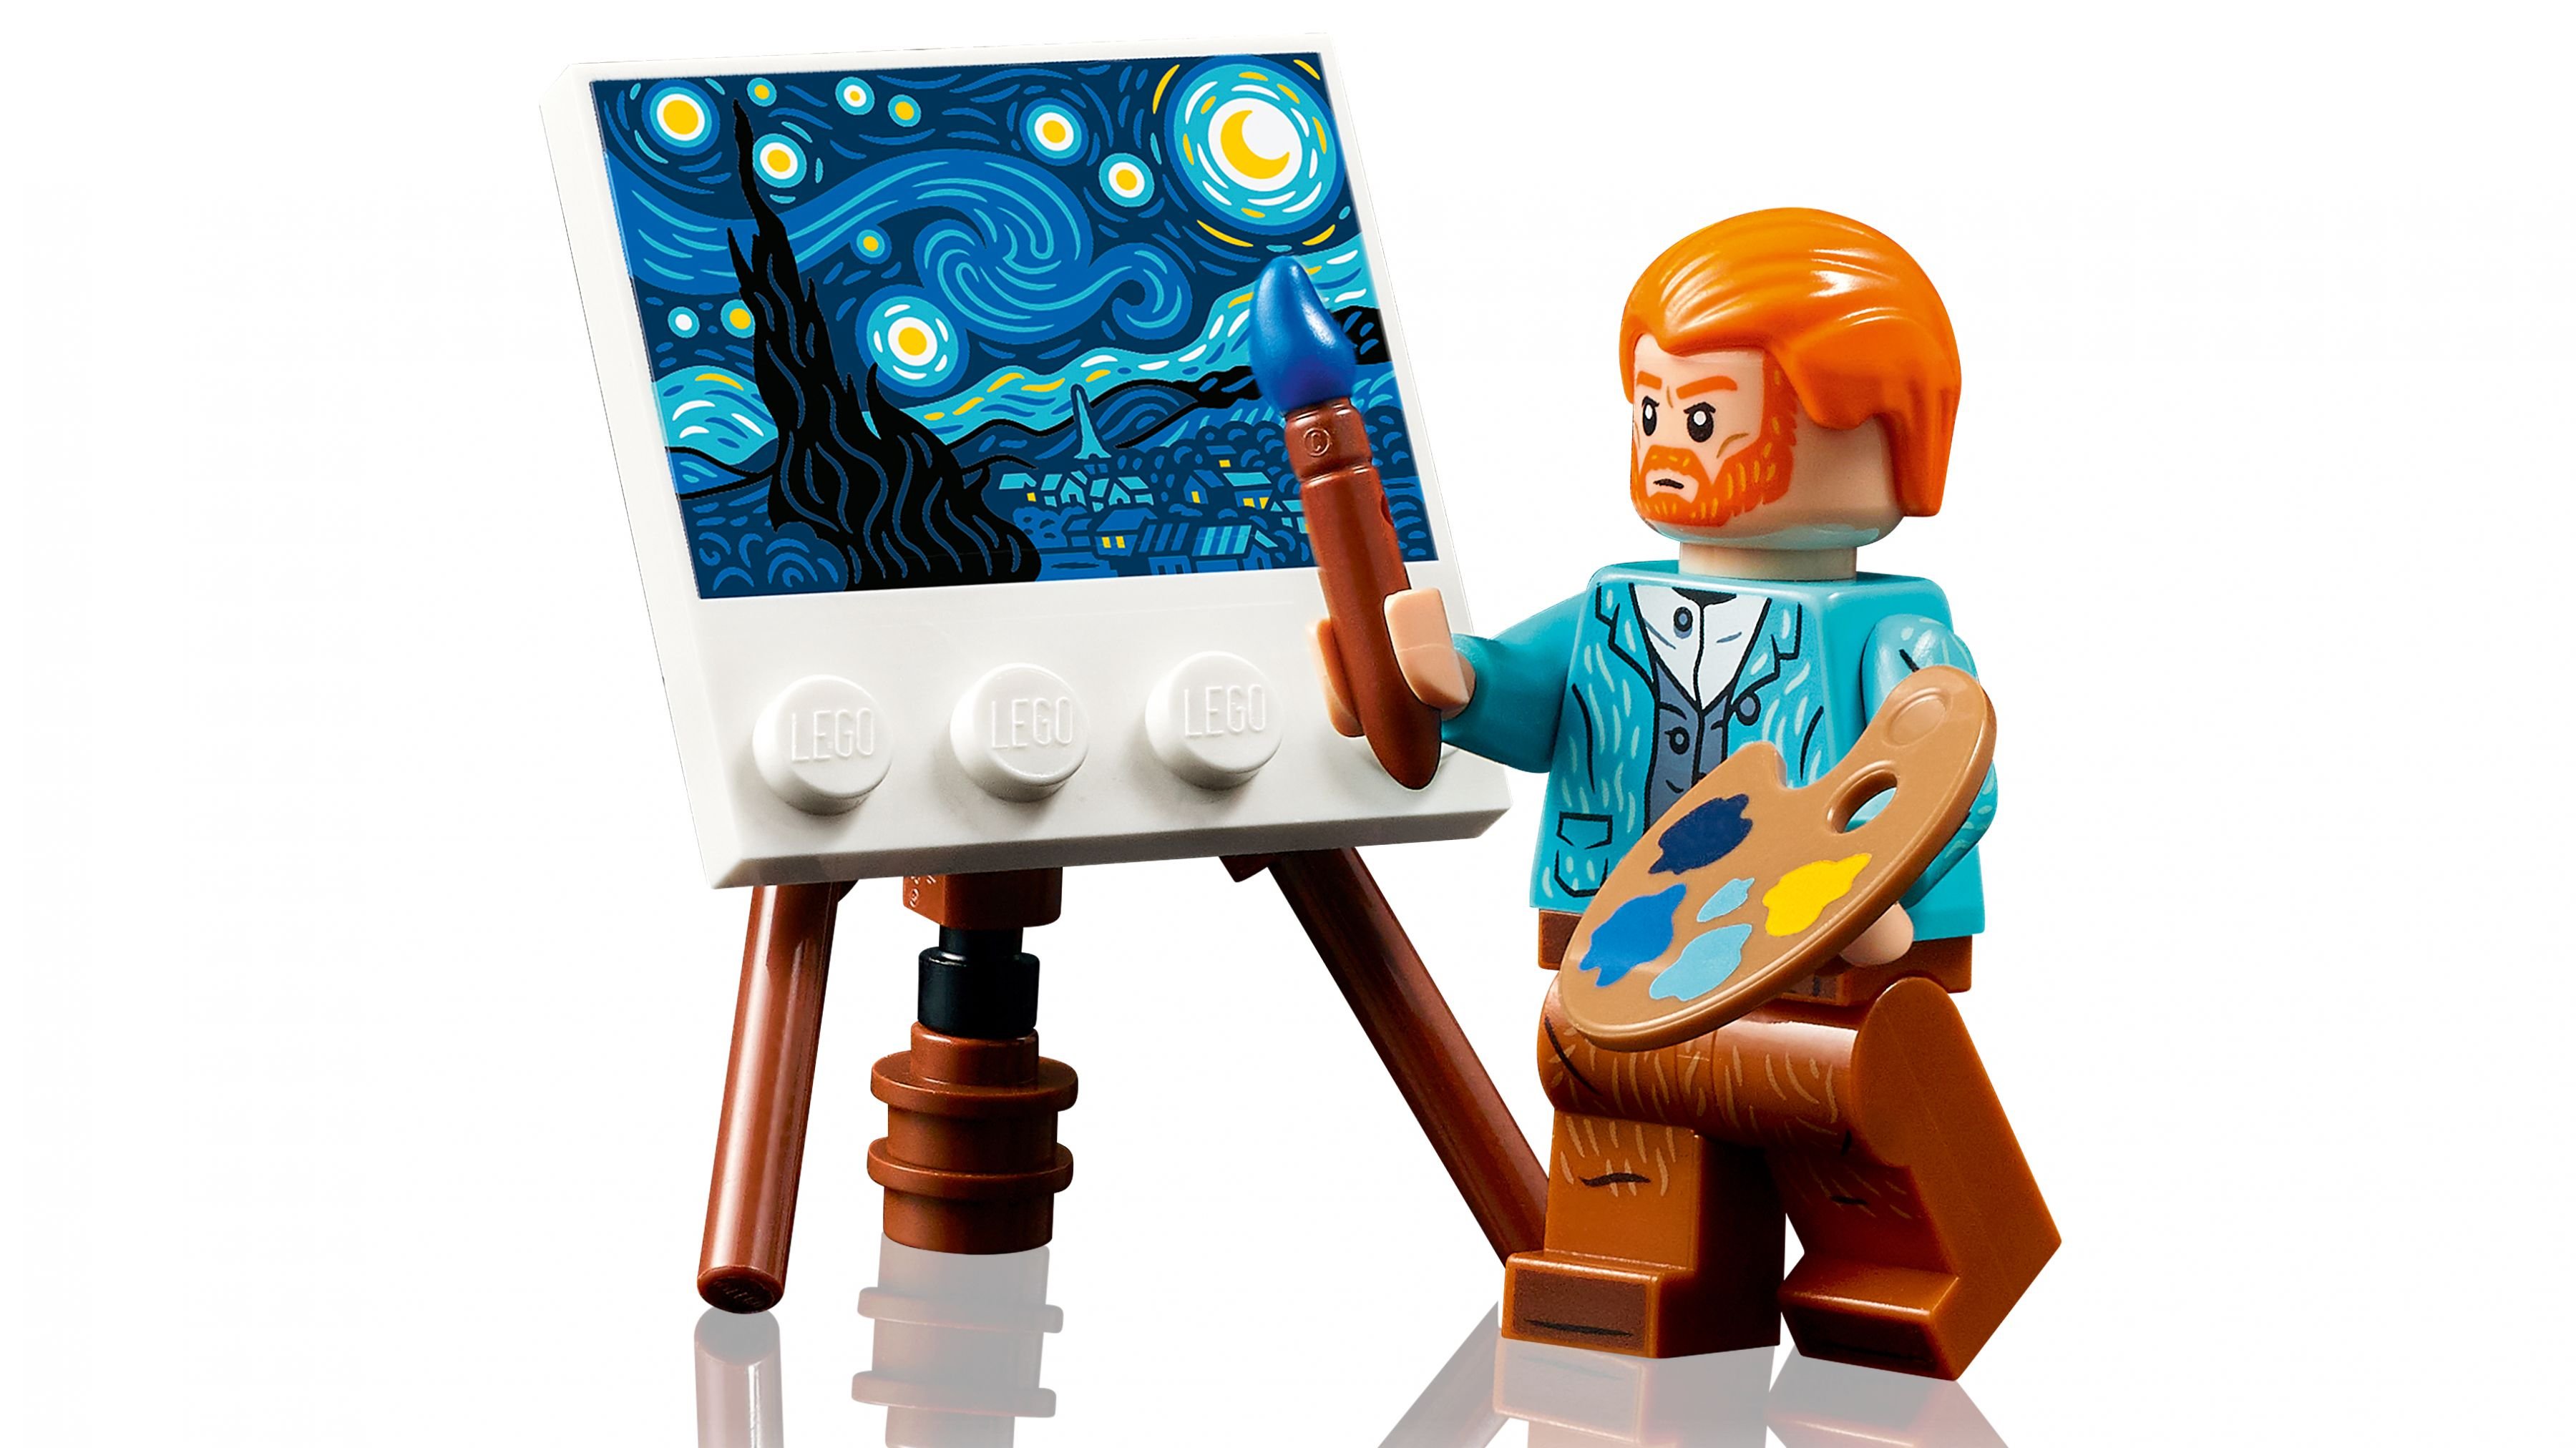 LEGO Ideas 21333 Vincent van Gogh – Sternennacht LEGO_21333_WEB_SEC02_NOBG.jpg